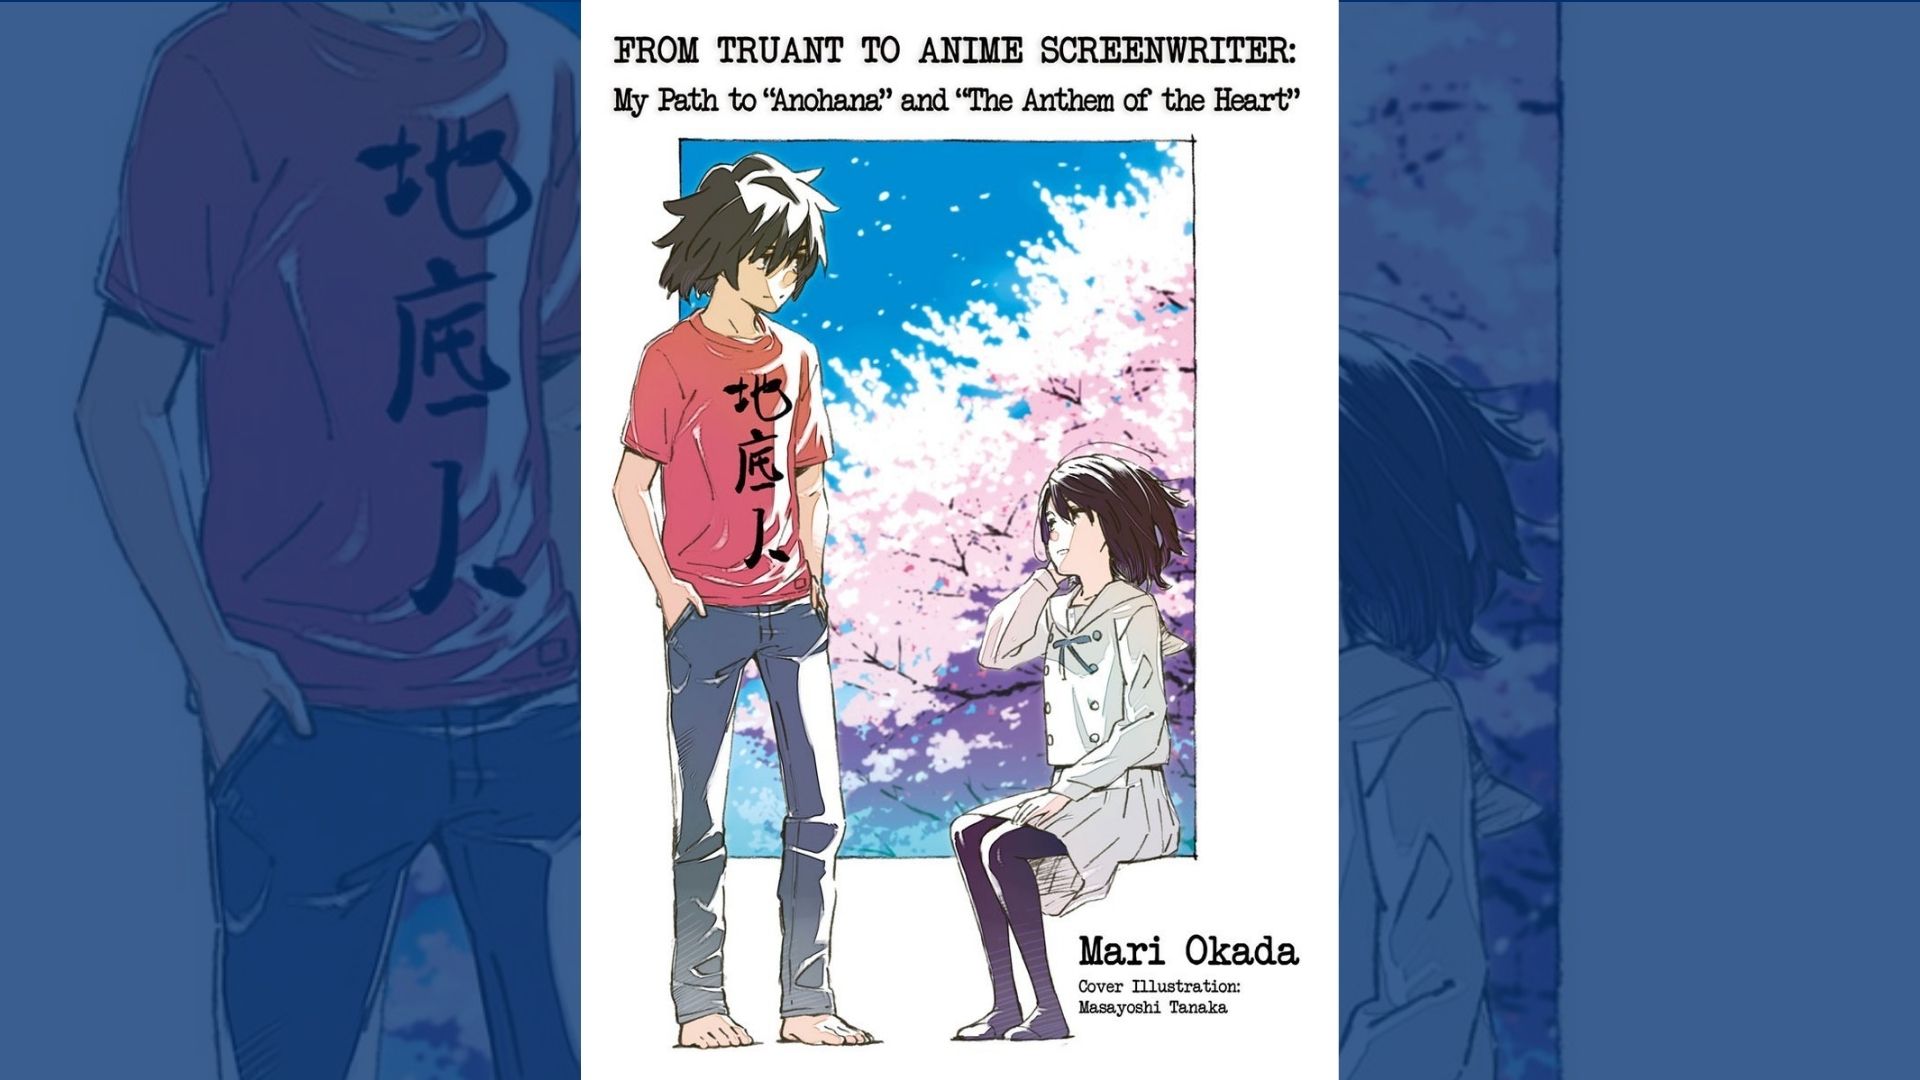 Mari Okadas From Truant to Anime Screenwriter